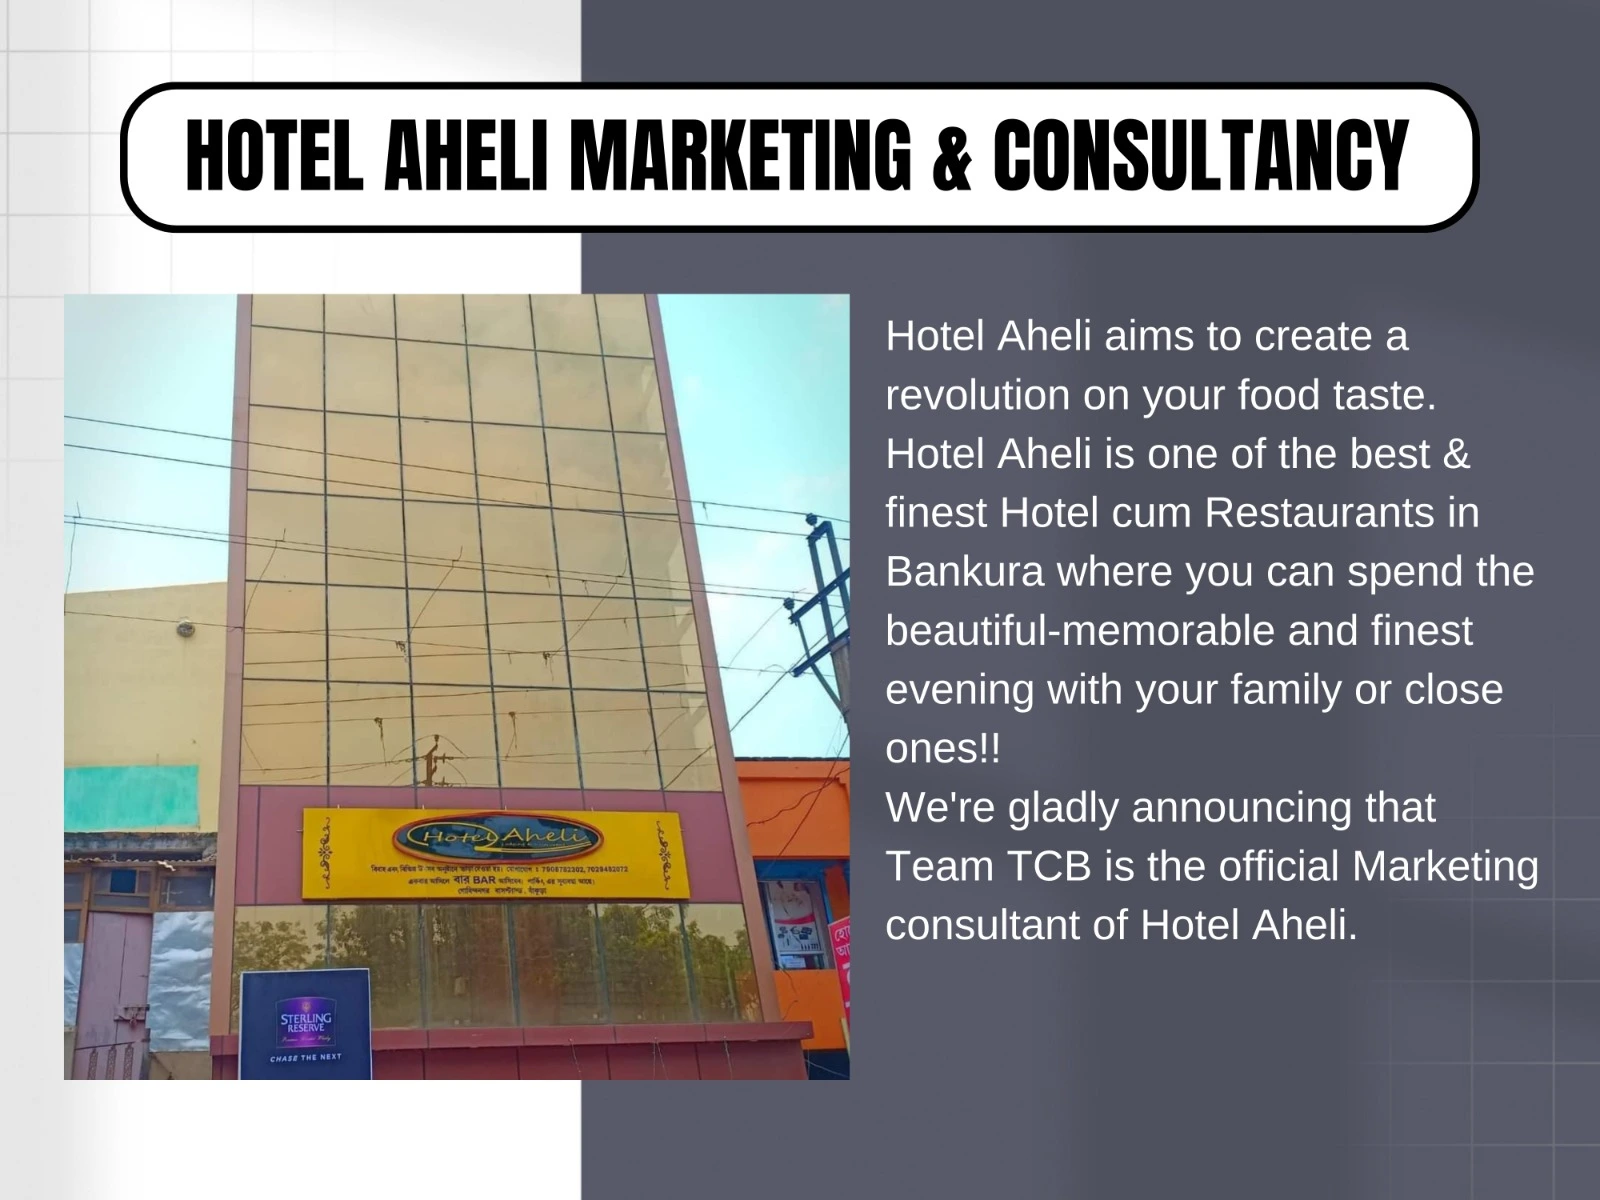 HOTEL AHELI MARKETING & CONSULTANCY